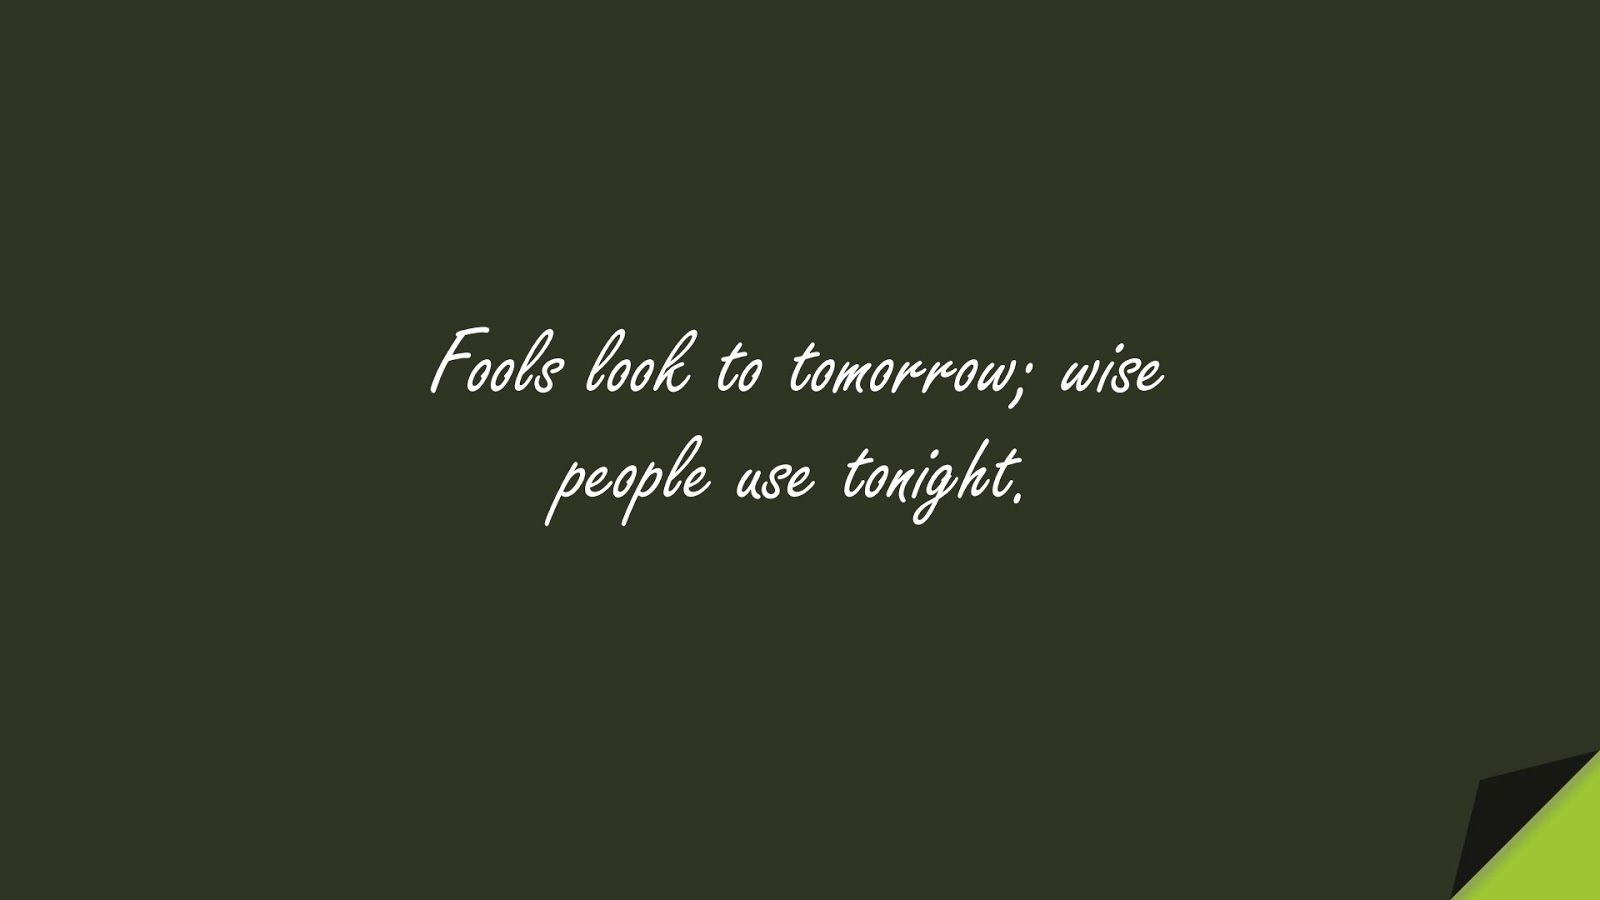 Fools look to tomorrow; wise people use tonight.FALSE